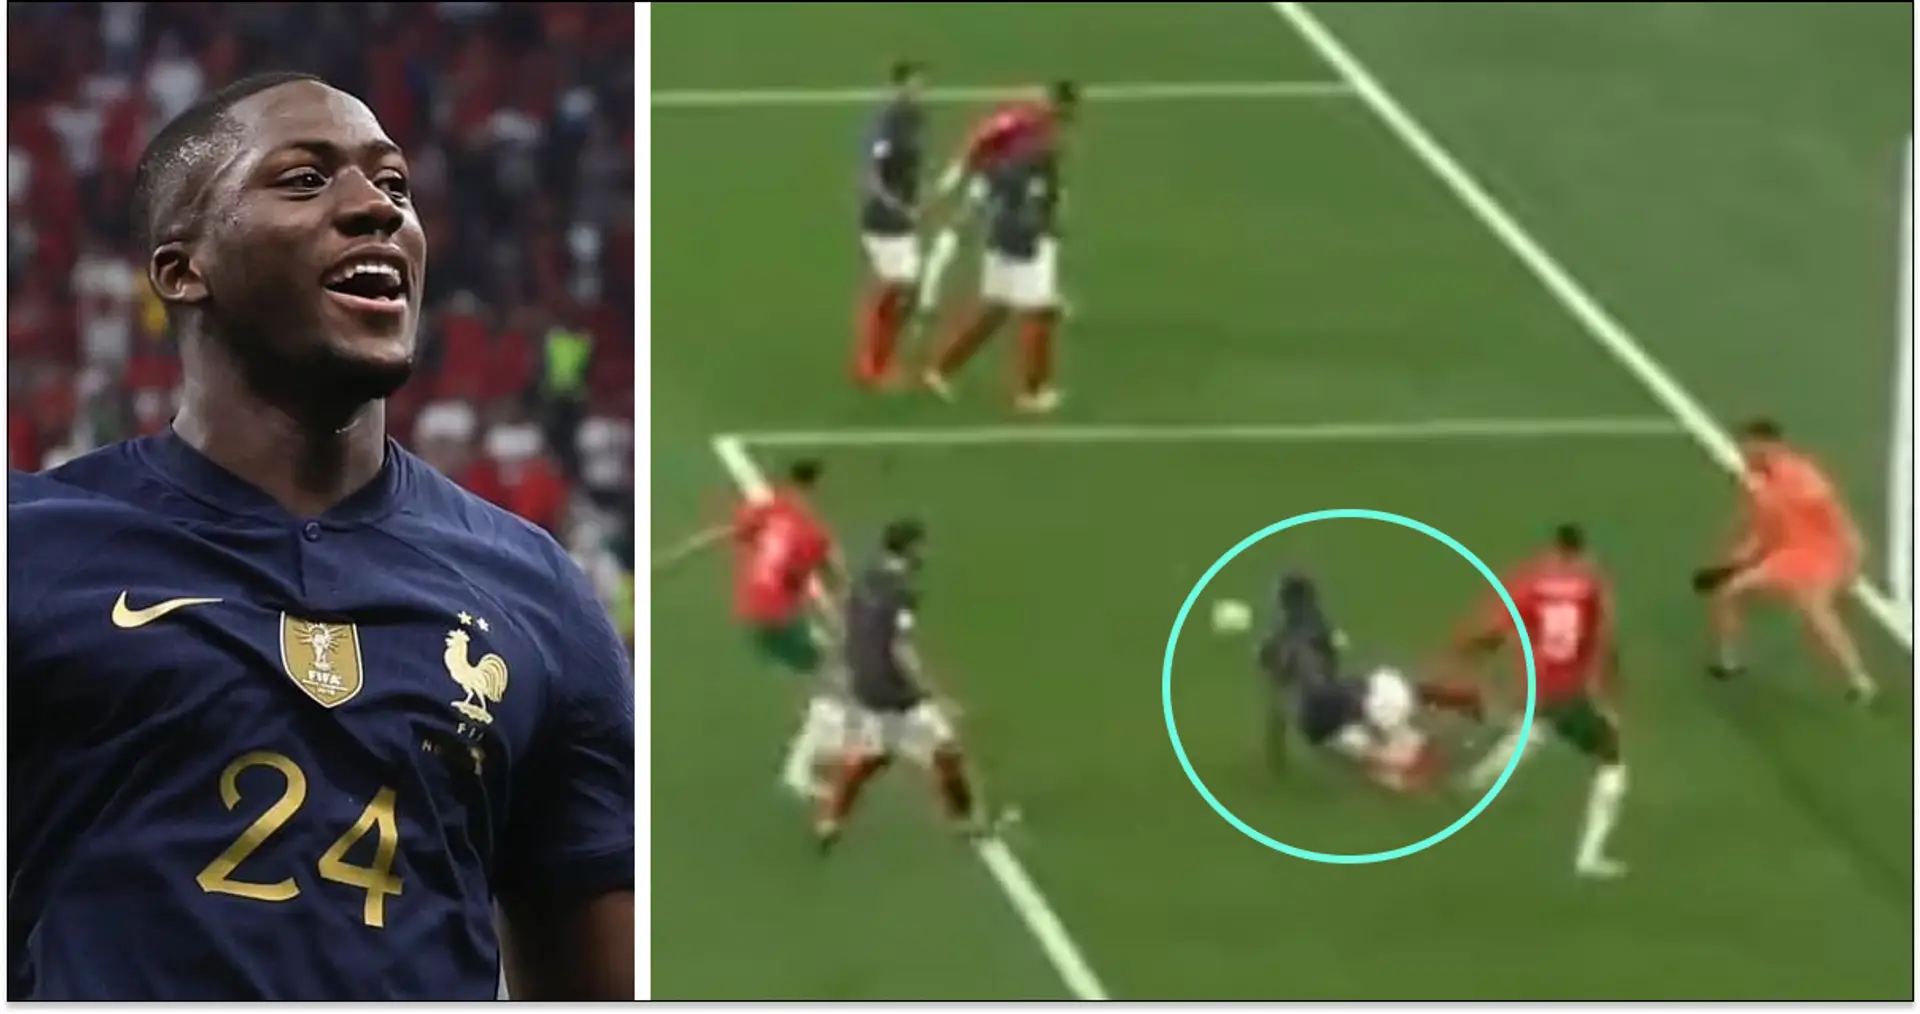 Konate's vital interception saves France from certain Morocco equaliser — in 4 images